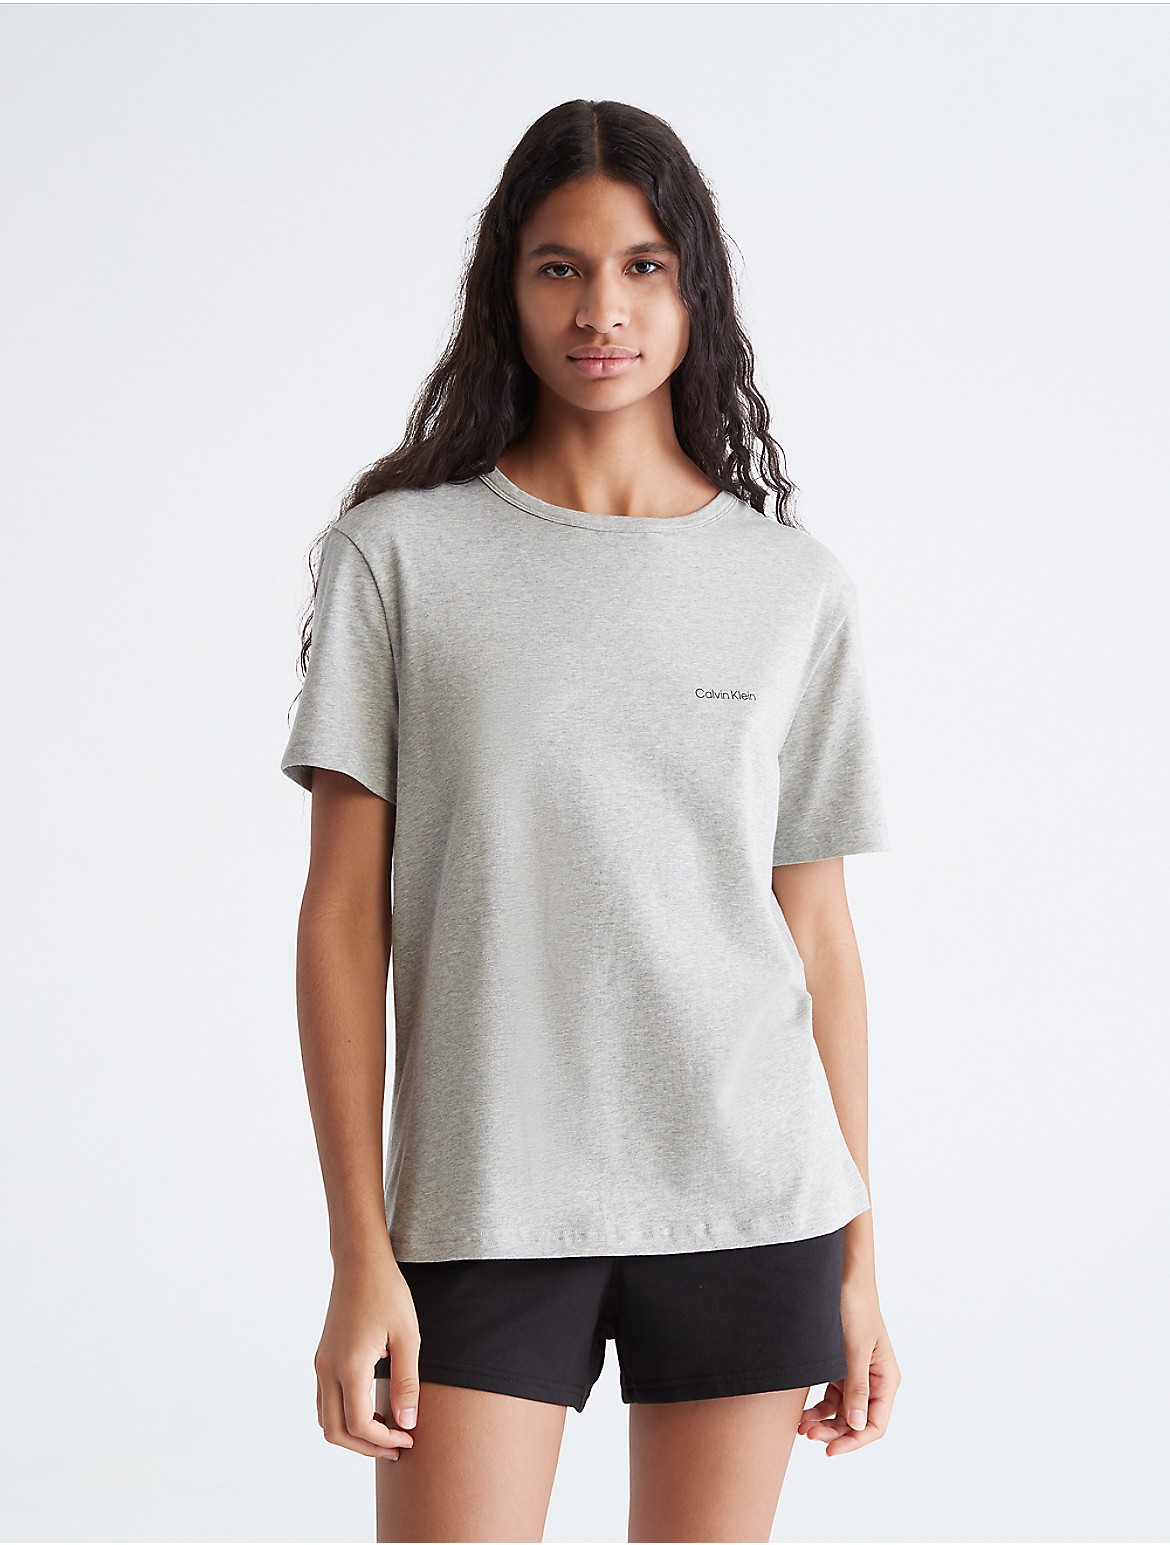 Calvin Klein Women's Modern Cotton Lounge Crewneck T-Shirt - Grey - S